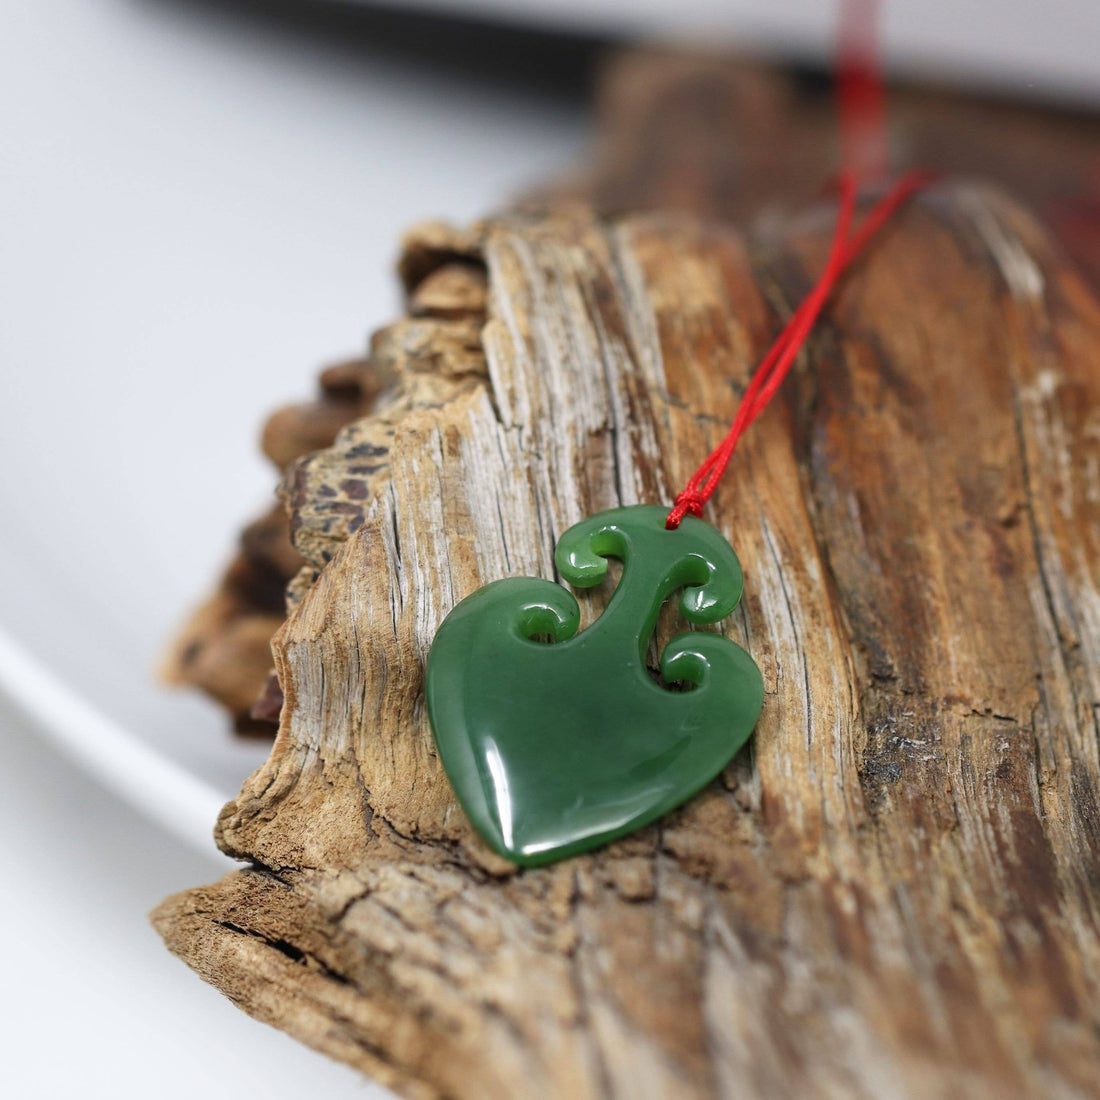 Baikalla Jewelry Baikalla™ "Lucky Jade Anchor" Green Jade Pendant Necklace